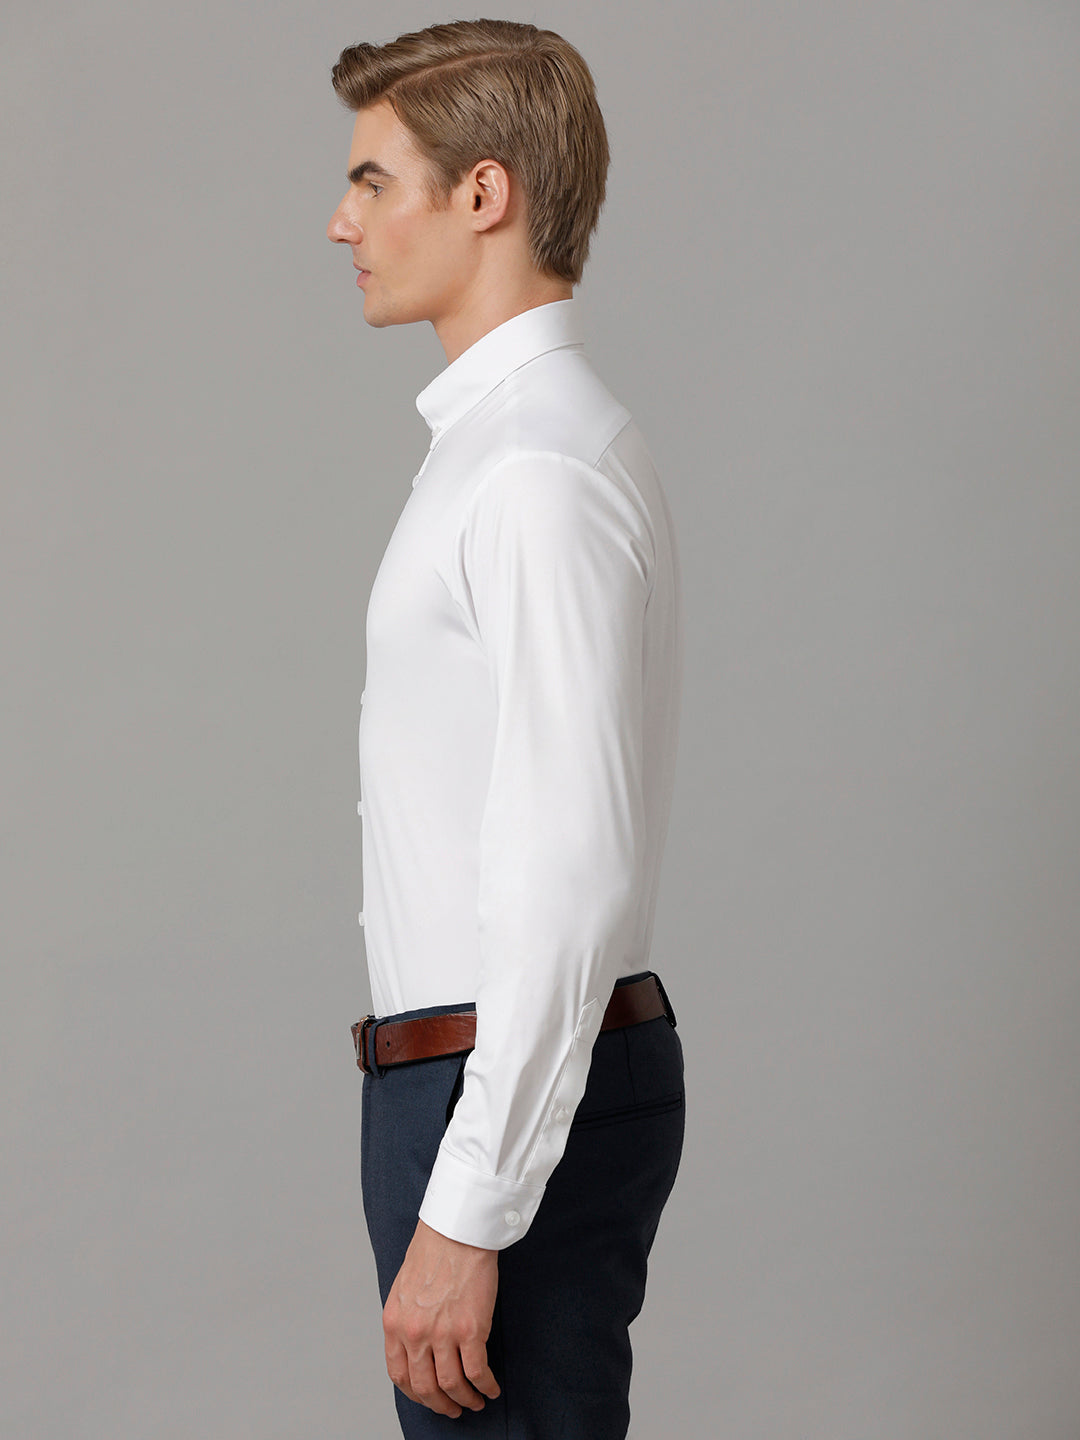 Aldeno Men Solid Formal White Shirt (NOLEN)